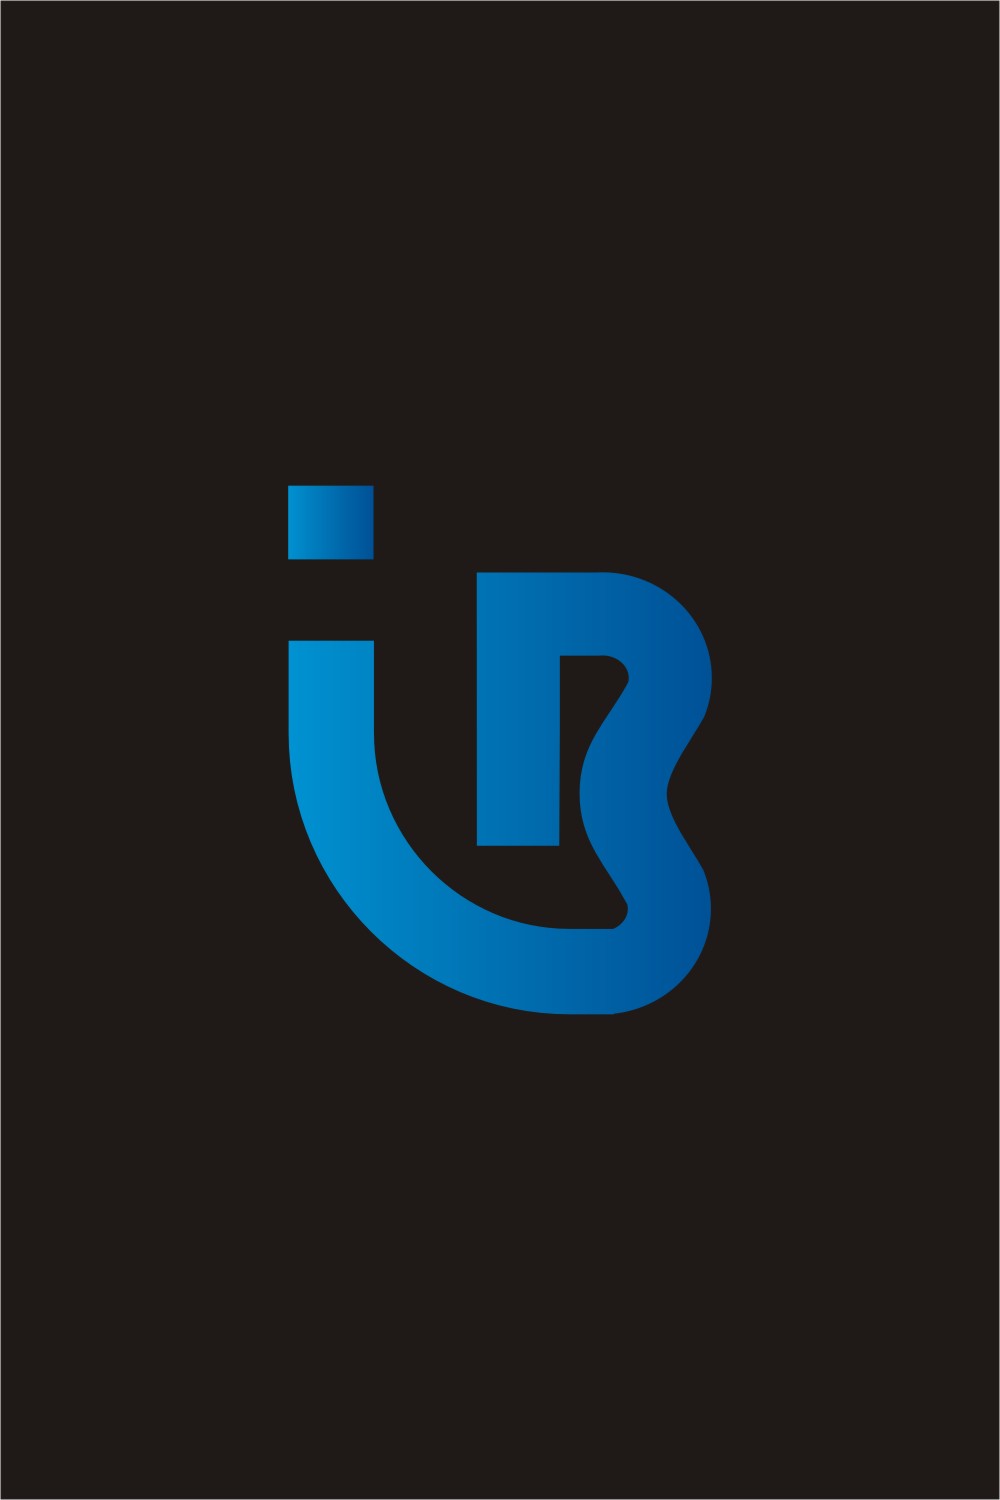 IB monogram logo pinterest preview image.